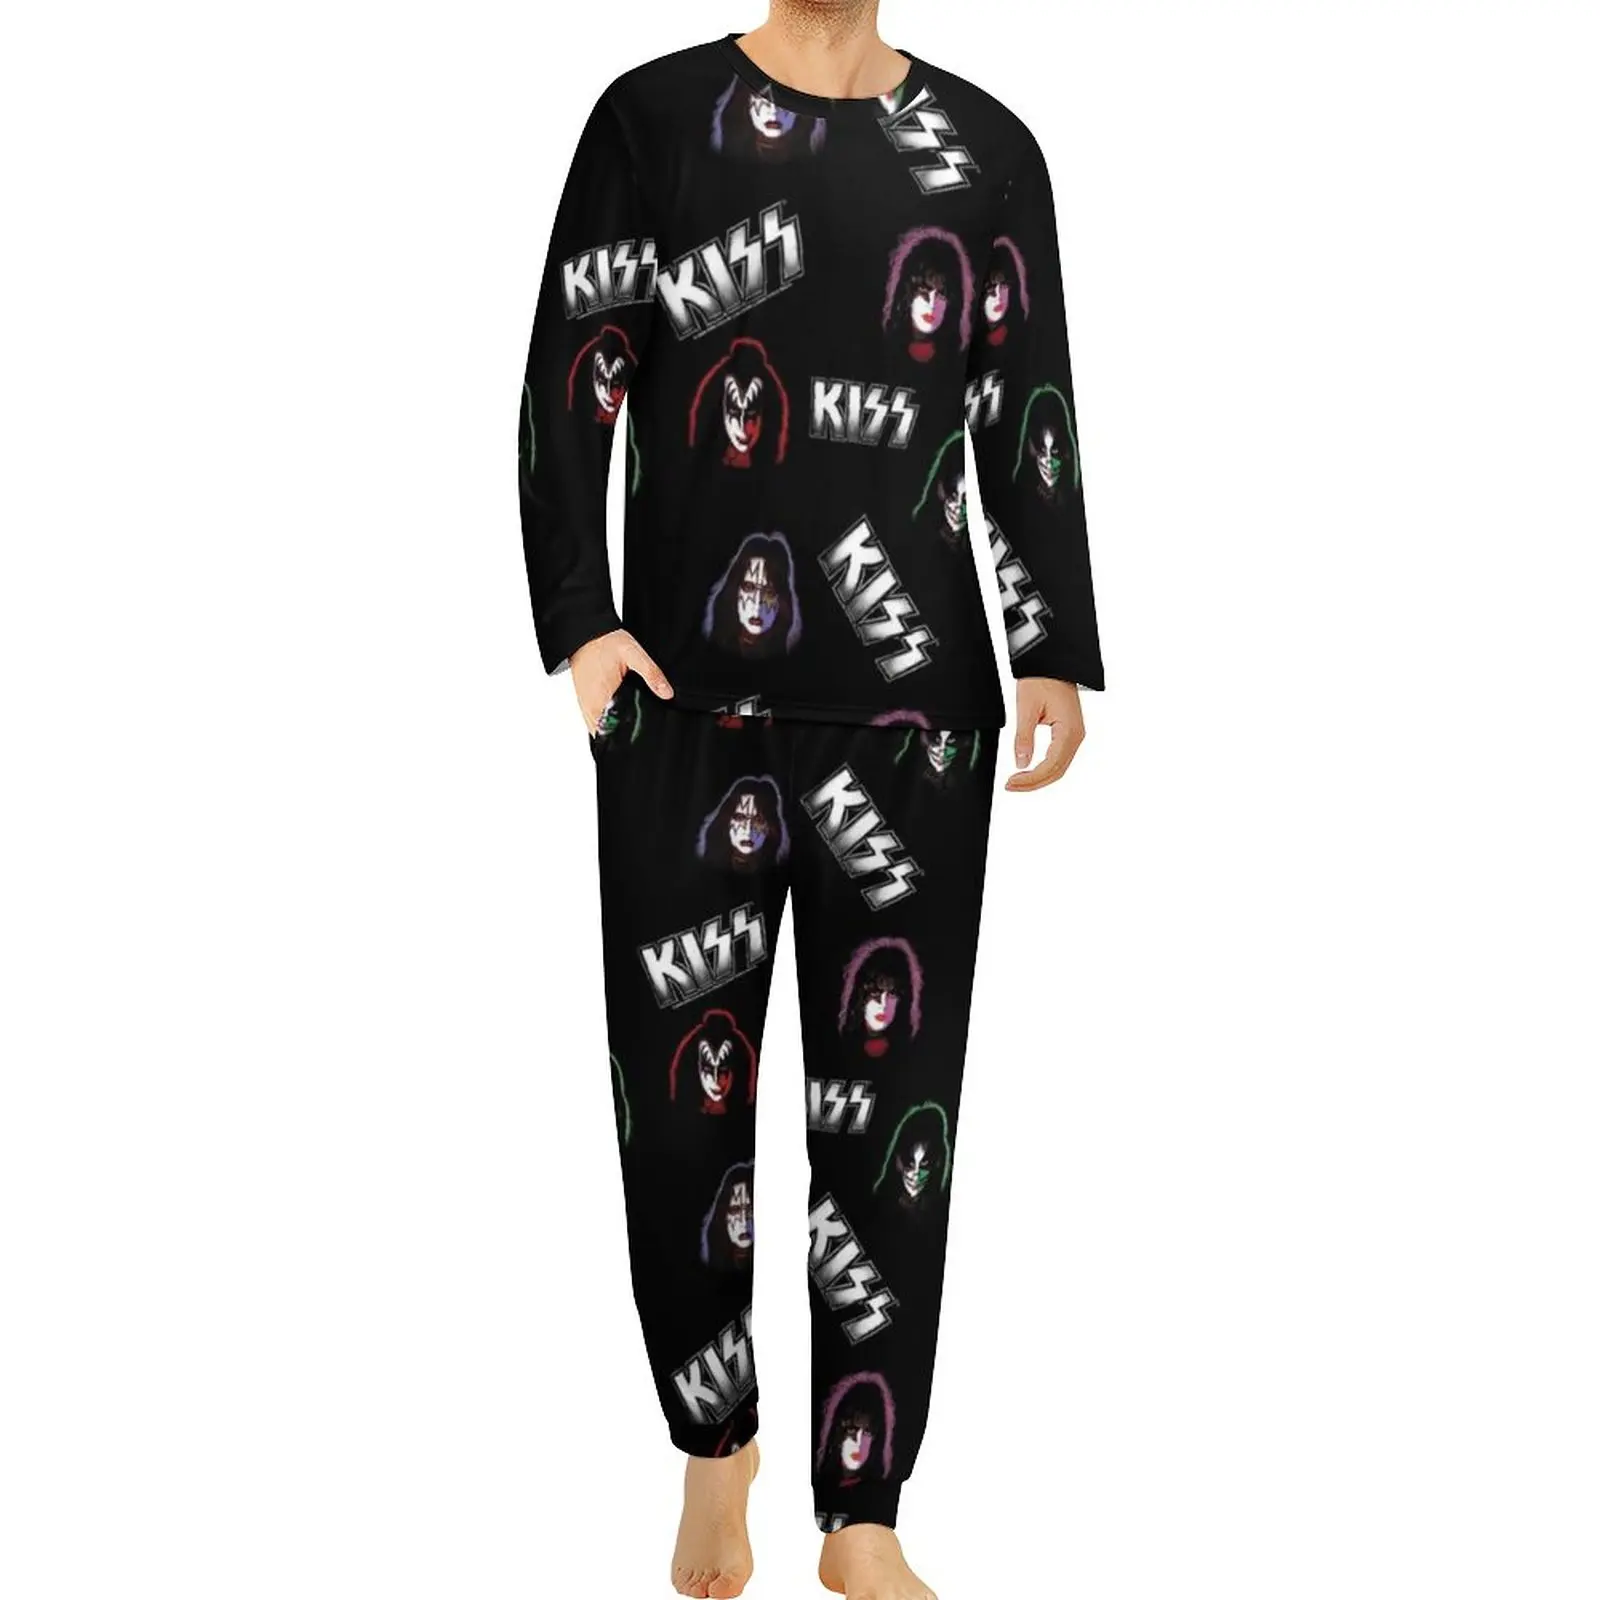 

Kiss Band Pajamas Spring 2 Pieces Rock Musician Trendy Pajama Sets Man Long Sleeve Casual Design Nightwear Large Size